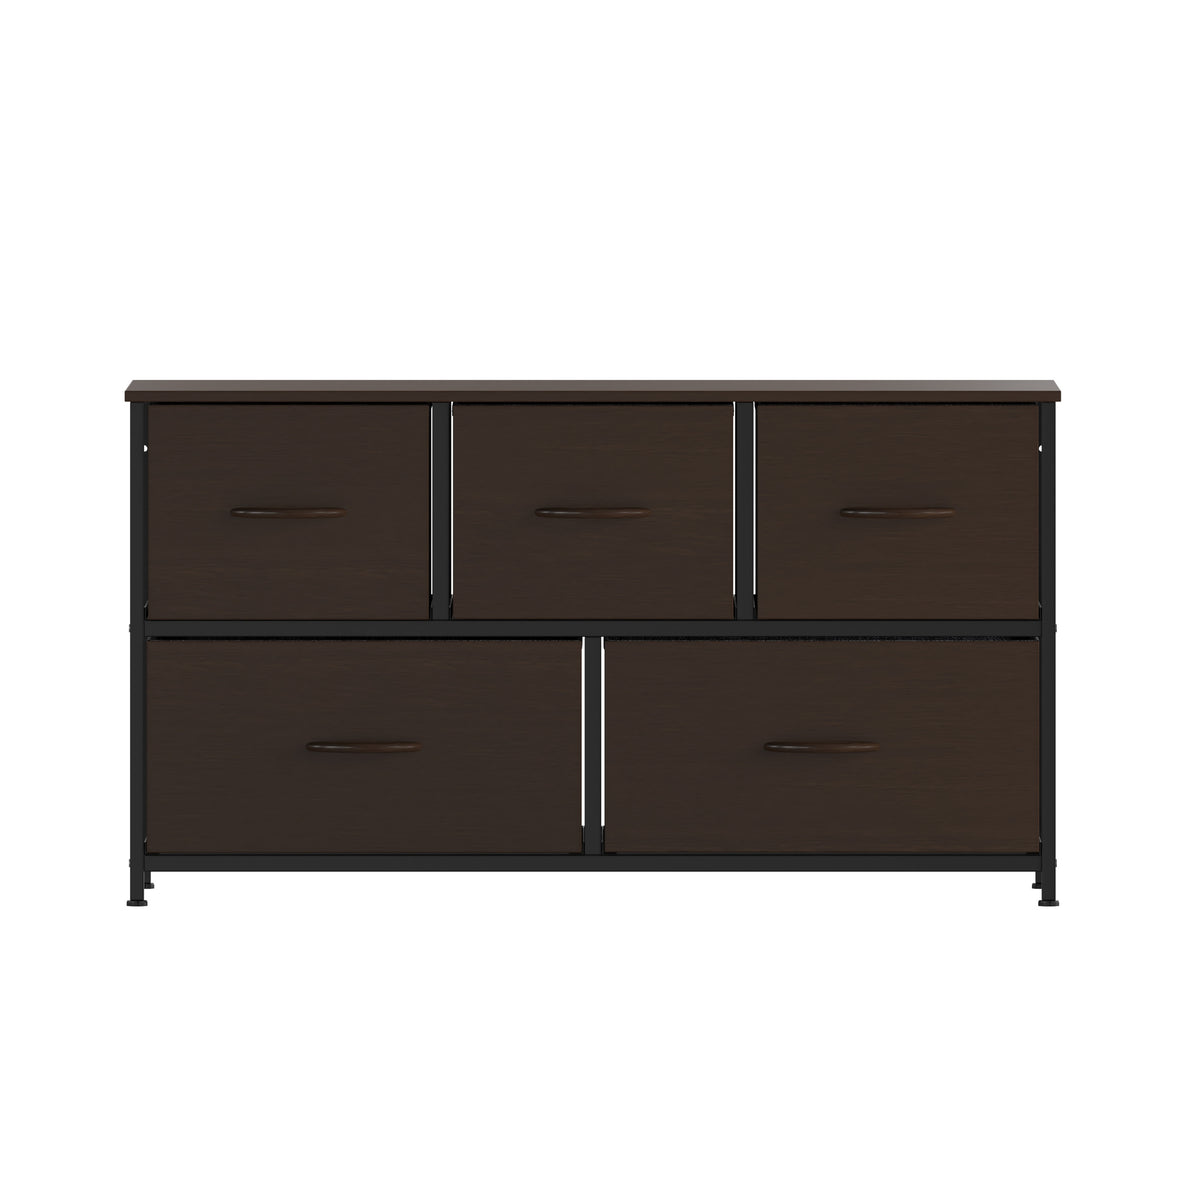 Brown Drawers/Black Frame |#| 4 Drawer Dresser-Brown Wood Top/Black Iron Frame/Brown Drawers - Brown Handles